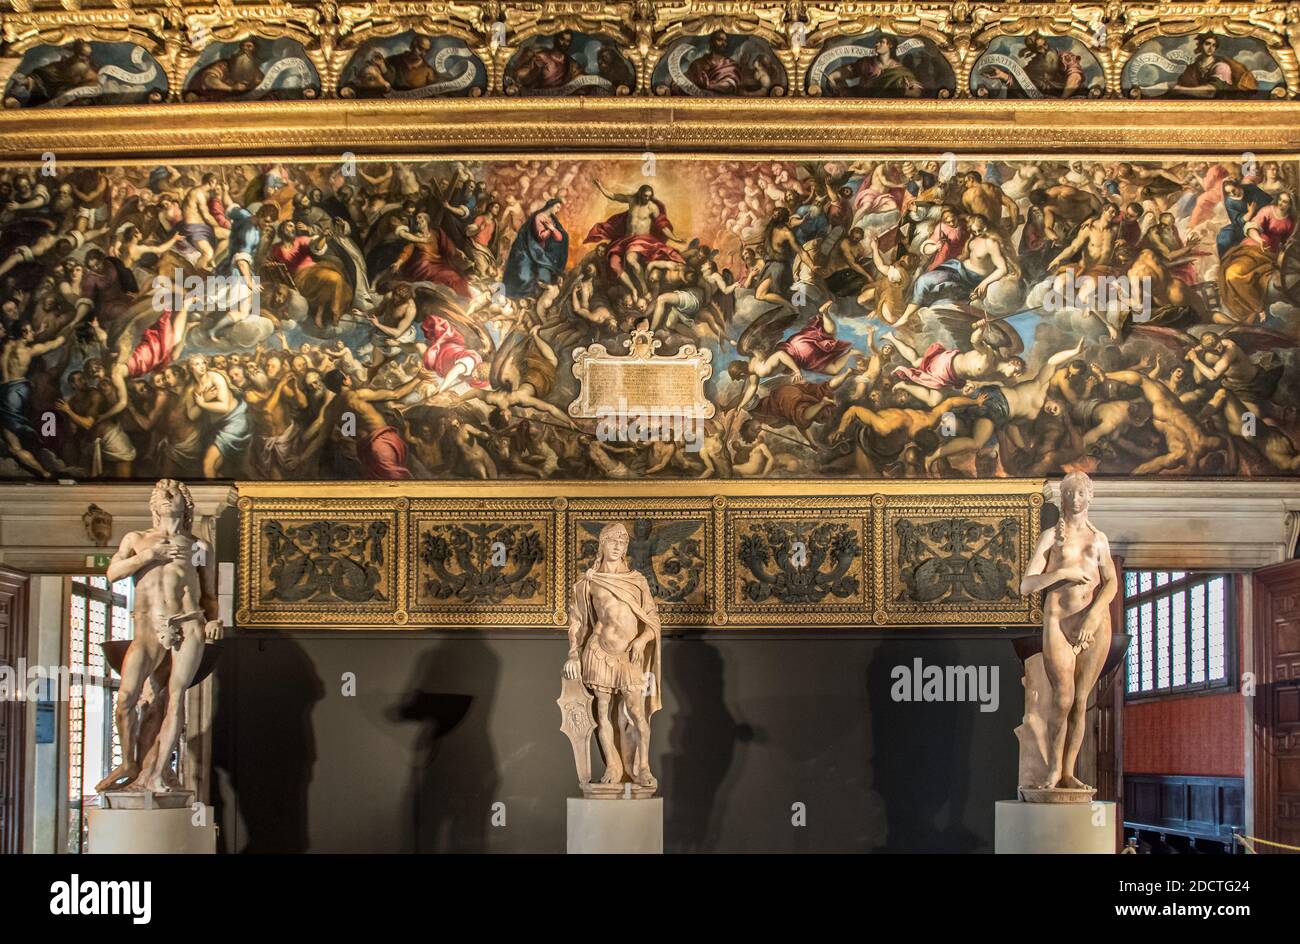 Venedig, Italien - 3. Oktober 2020: Innenraum des Dogenpalastes, der Sala dello Scrutinio. Fresko: Giudizio Universale von Jacopo Palma il Giovane, 1595 - S. Stockfoto